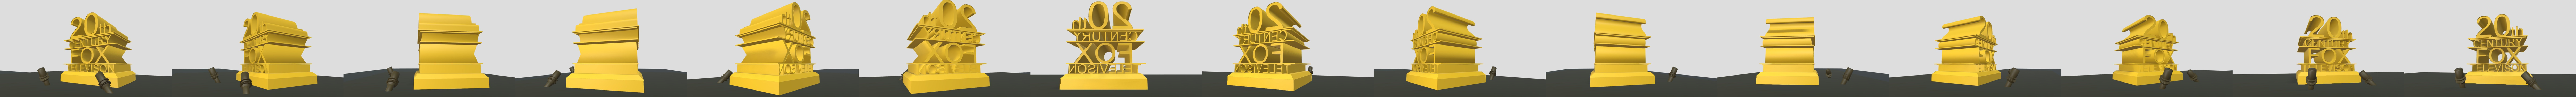 20th Century Fox Television logo - 3D model by demorea_simpson